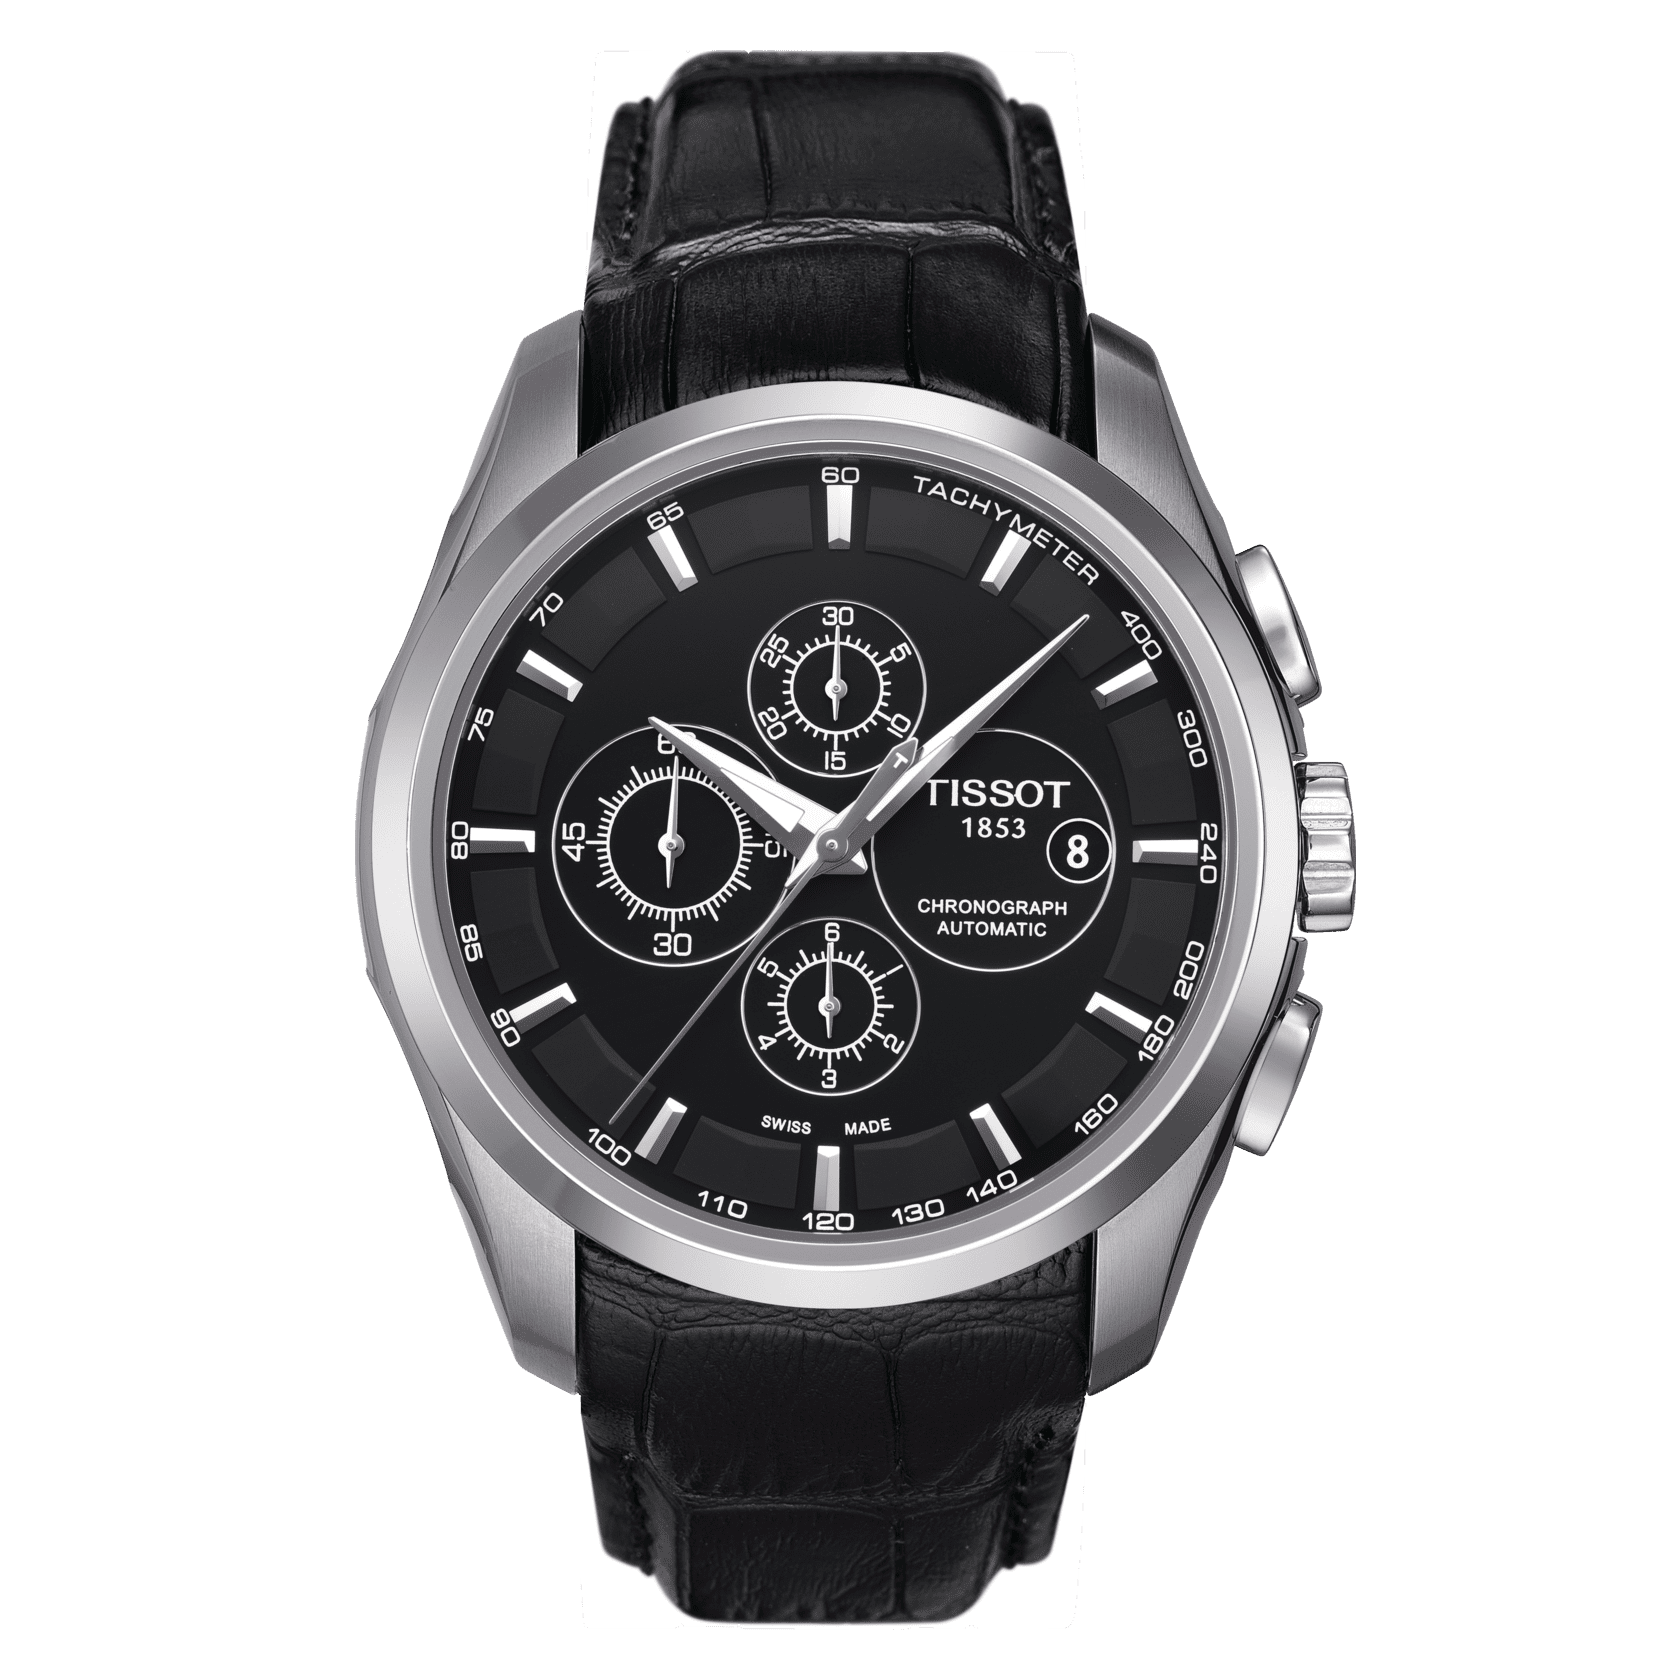 Jomashop Replica Rolex Watch